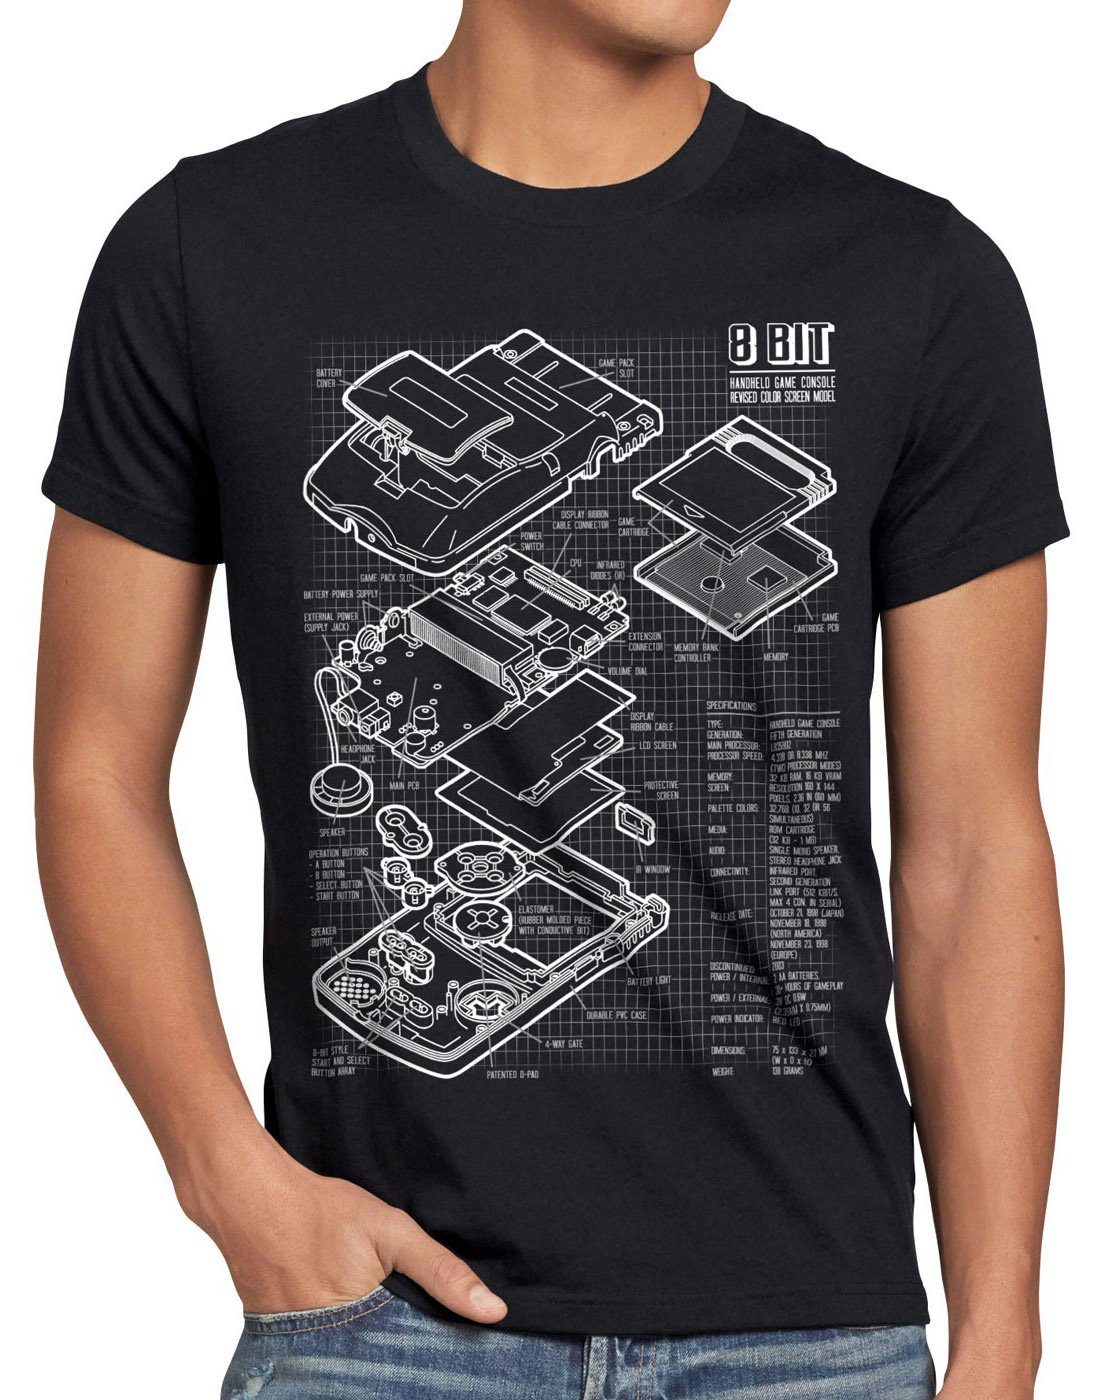 style3 T-Shirt zelda classic Boy Herren mario Game nes handheld gamer schwarz Print-Shirt super retro 8-Bit